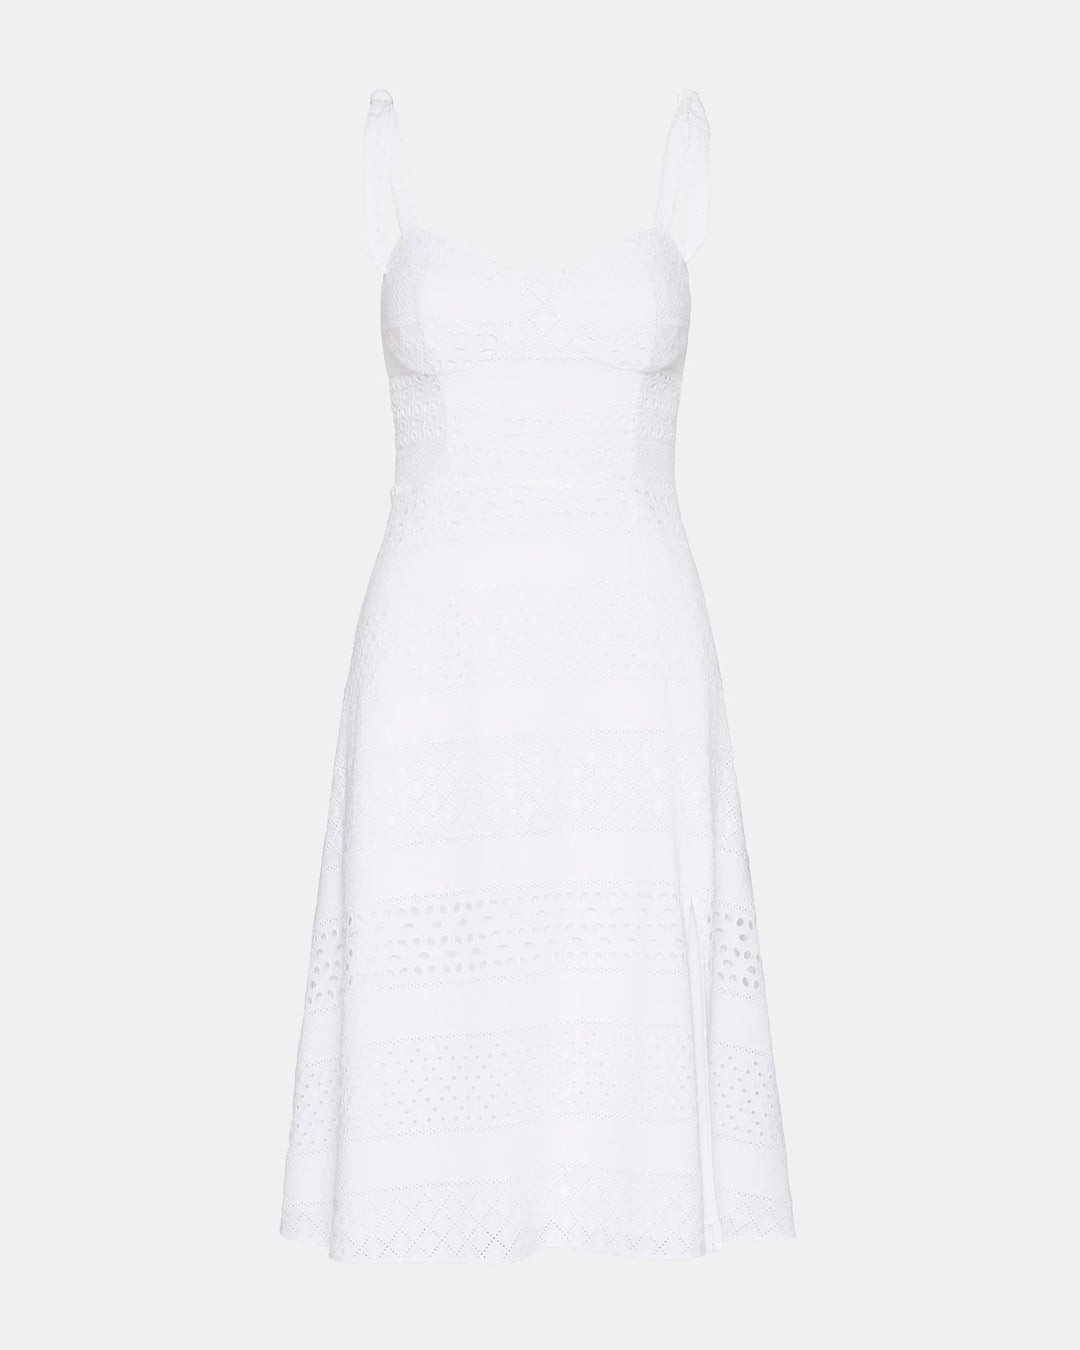 Steve Madden Carlynn Eyelete White Midi Dress